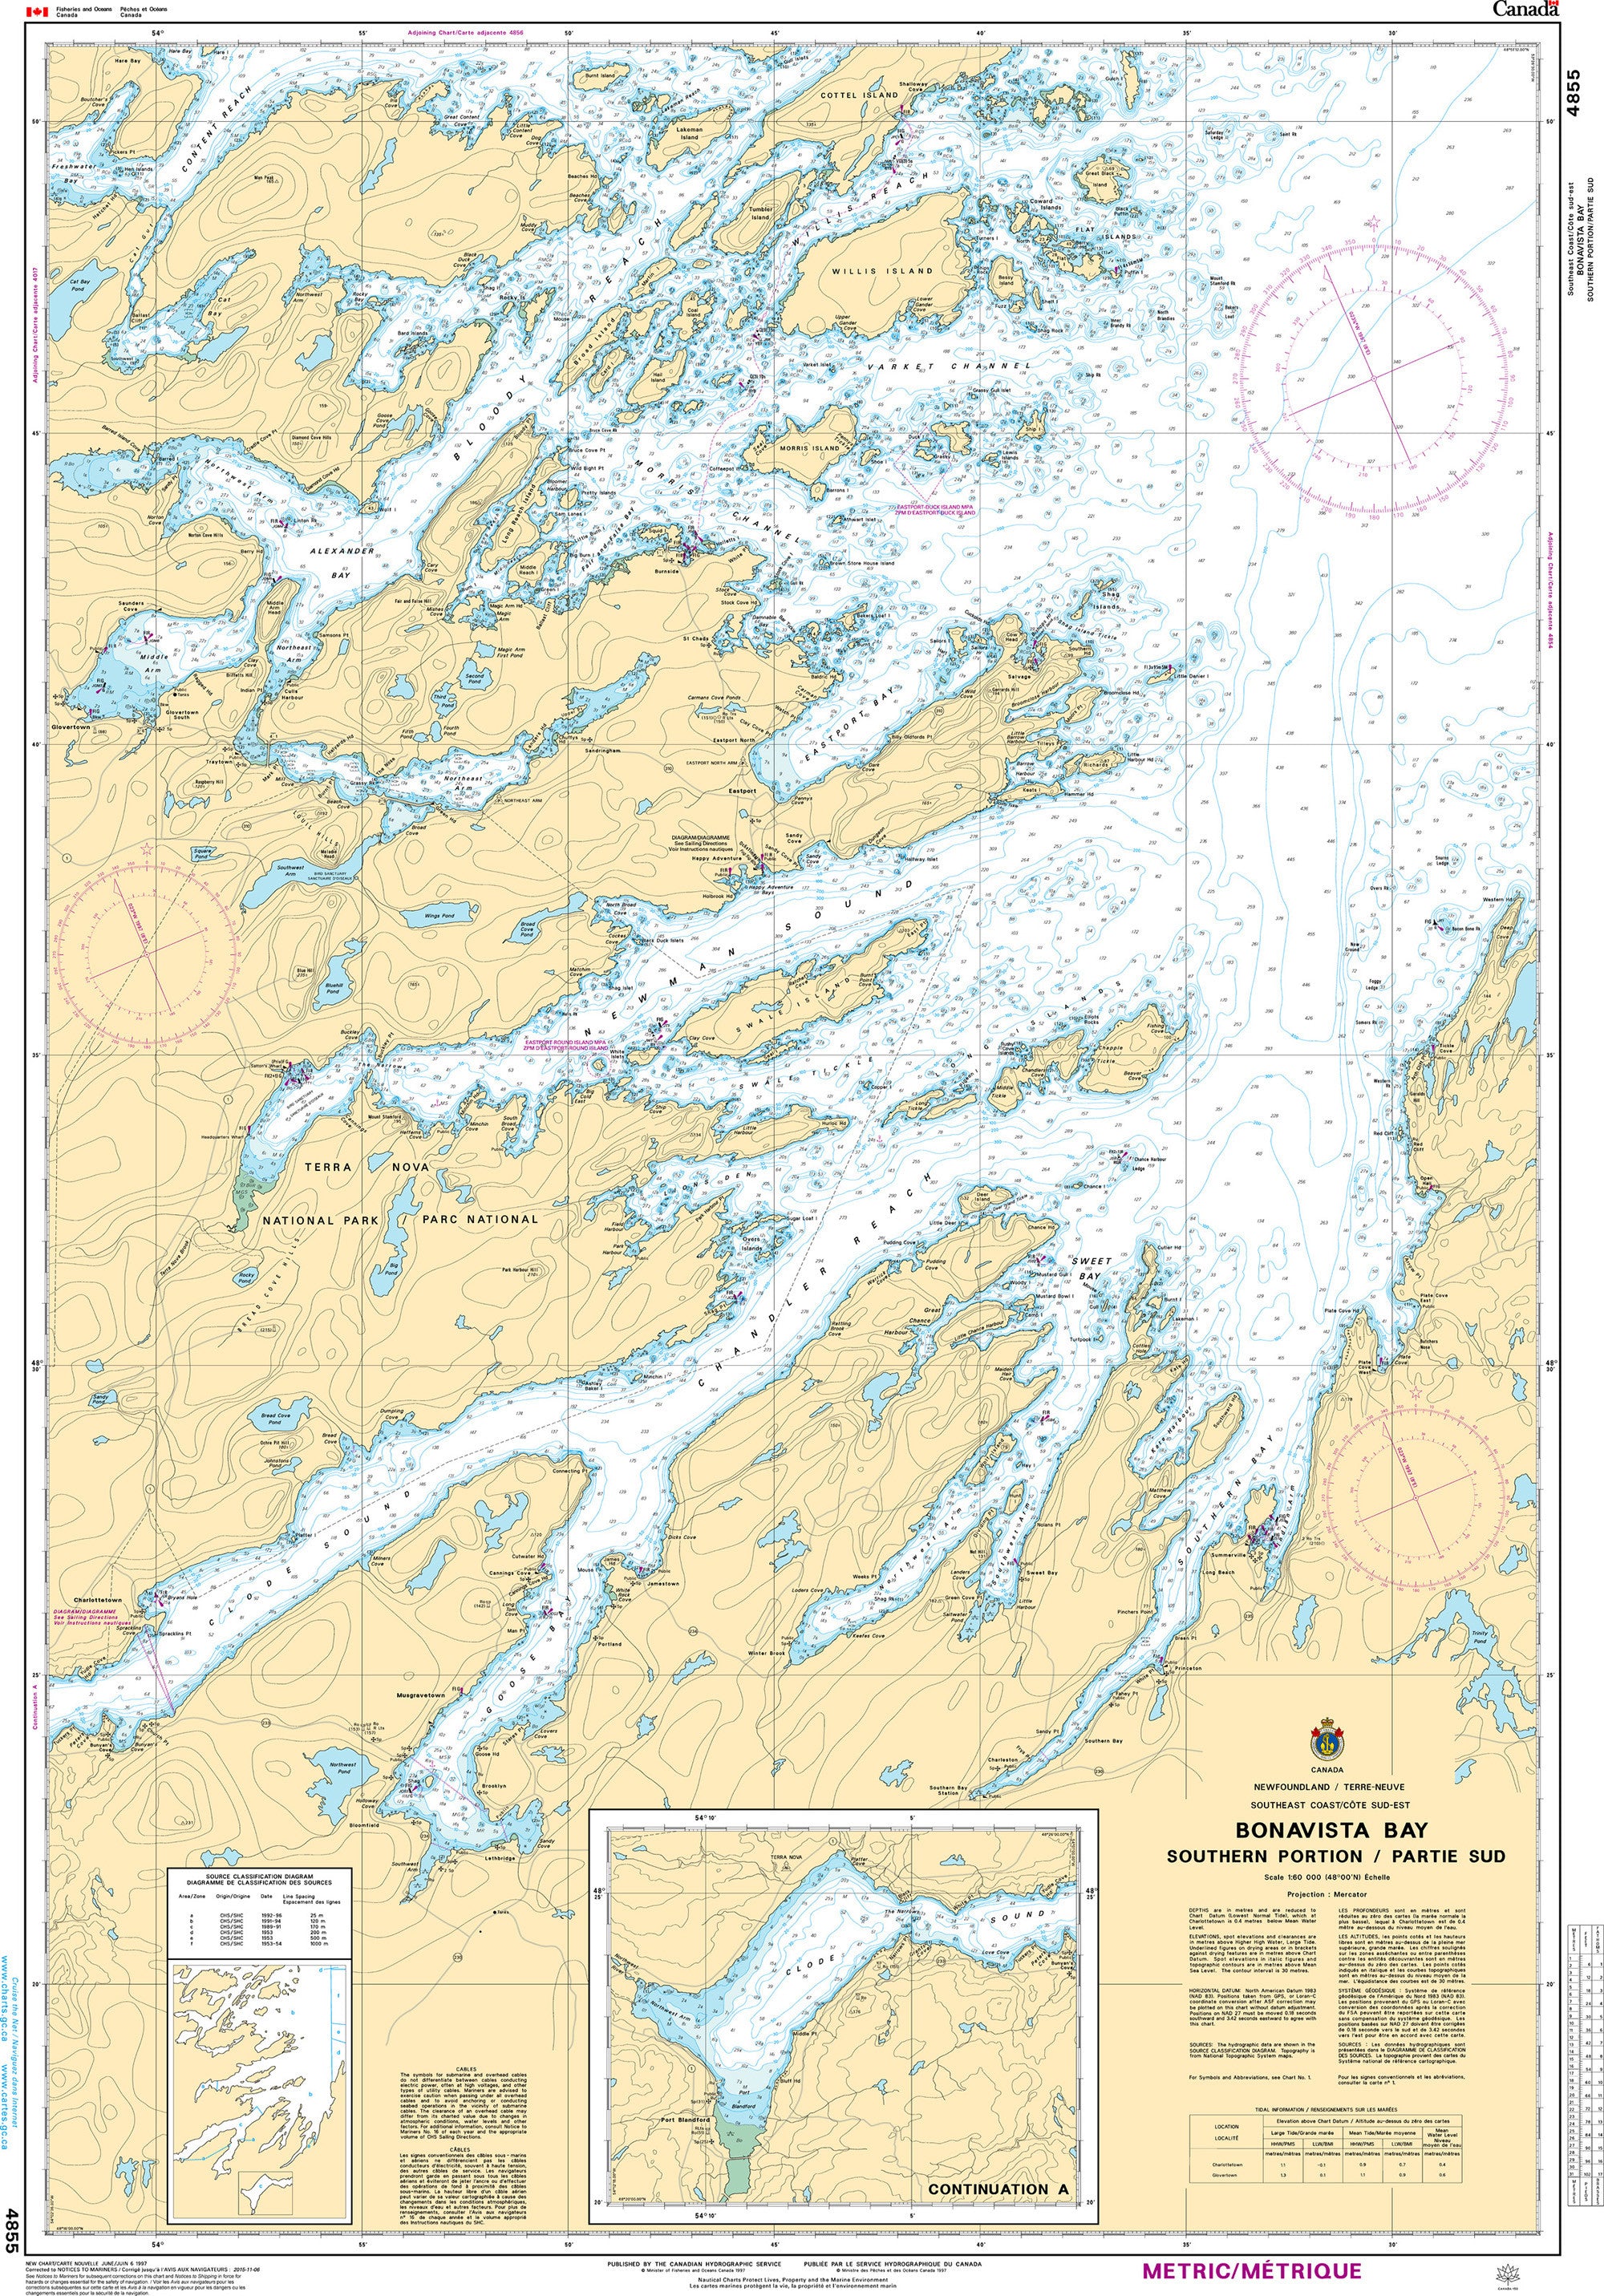 Canadian Hydrographic Service Nautical Chart CHS4855: Bonavista Bay, Southern Portion/Partie sud